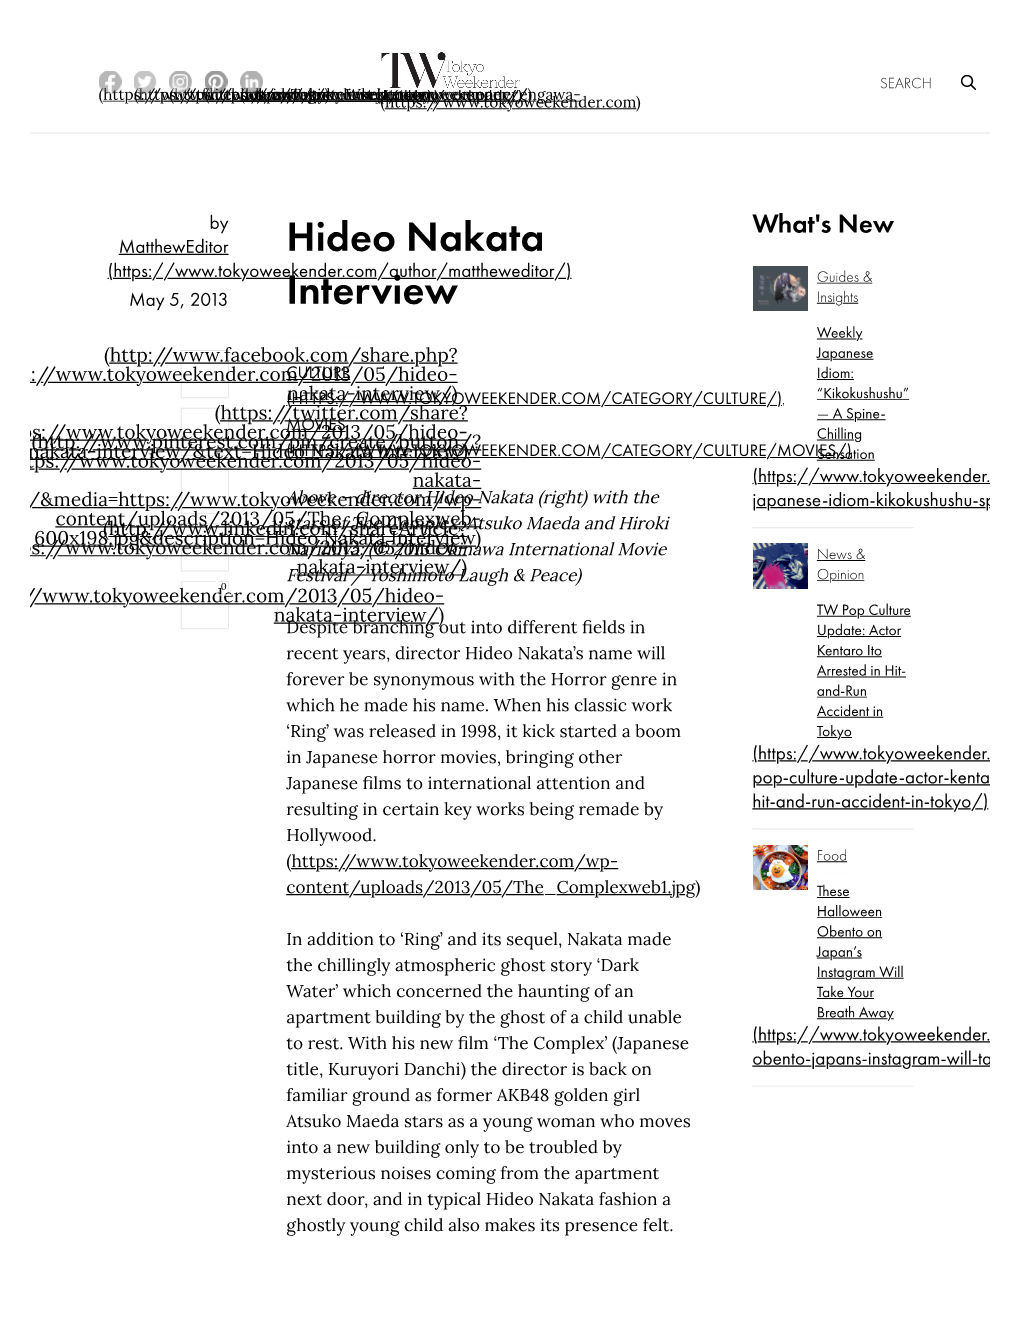 Hideo Nakata Interview